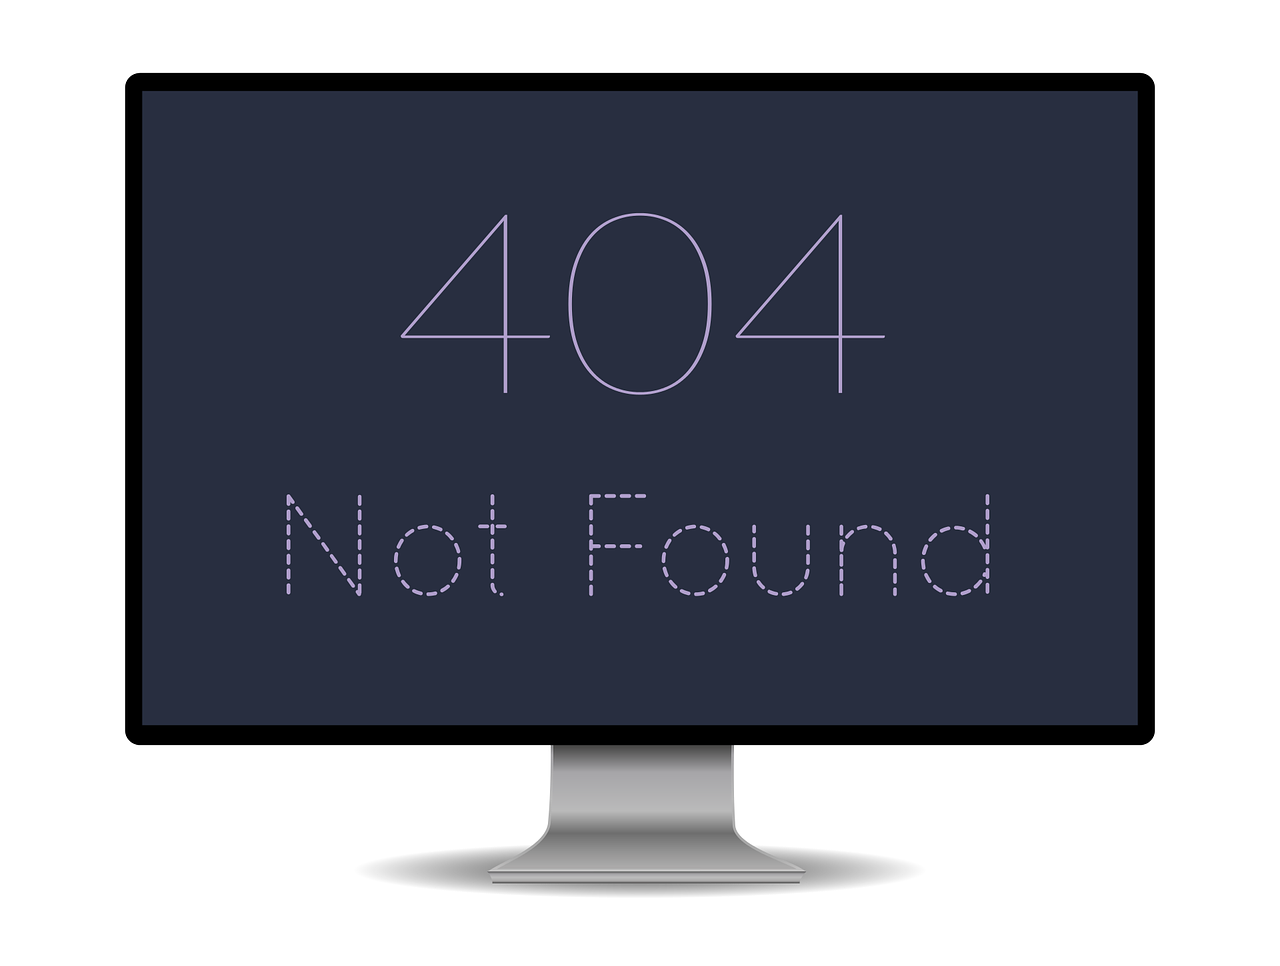 Ecran d'ordinateur avec une erreur 404